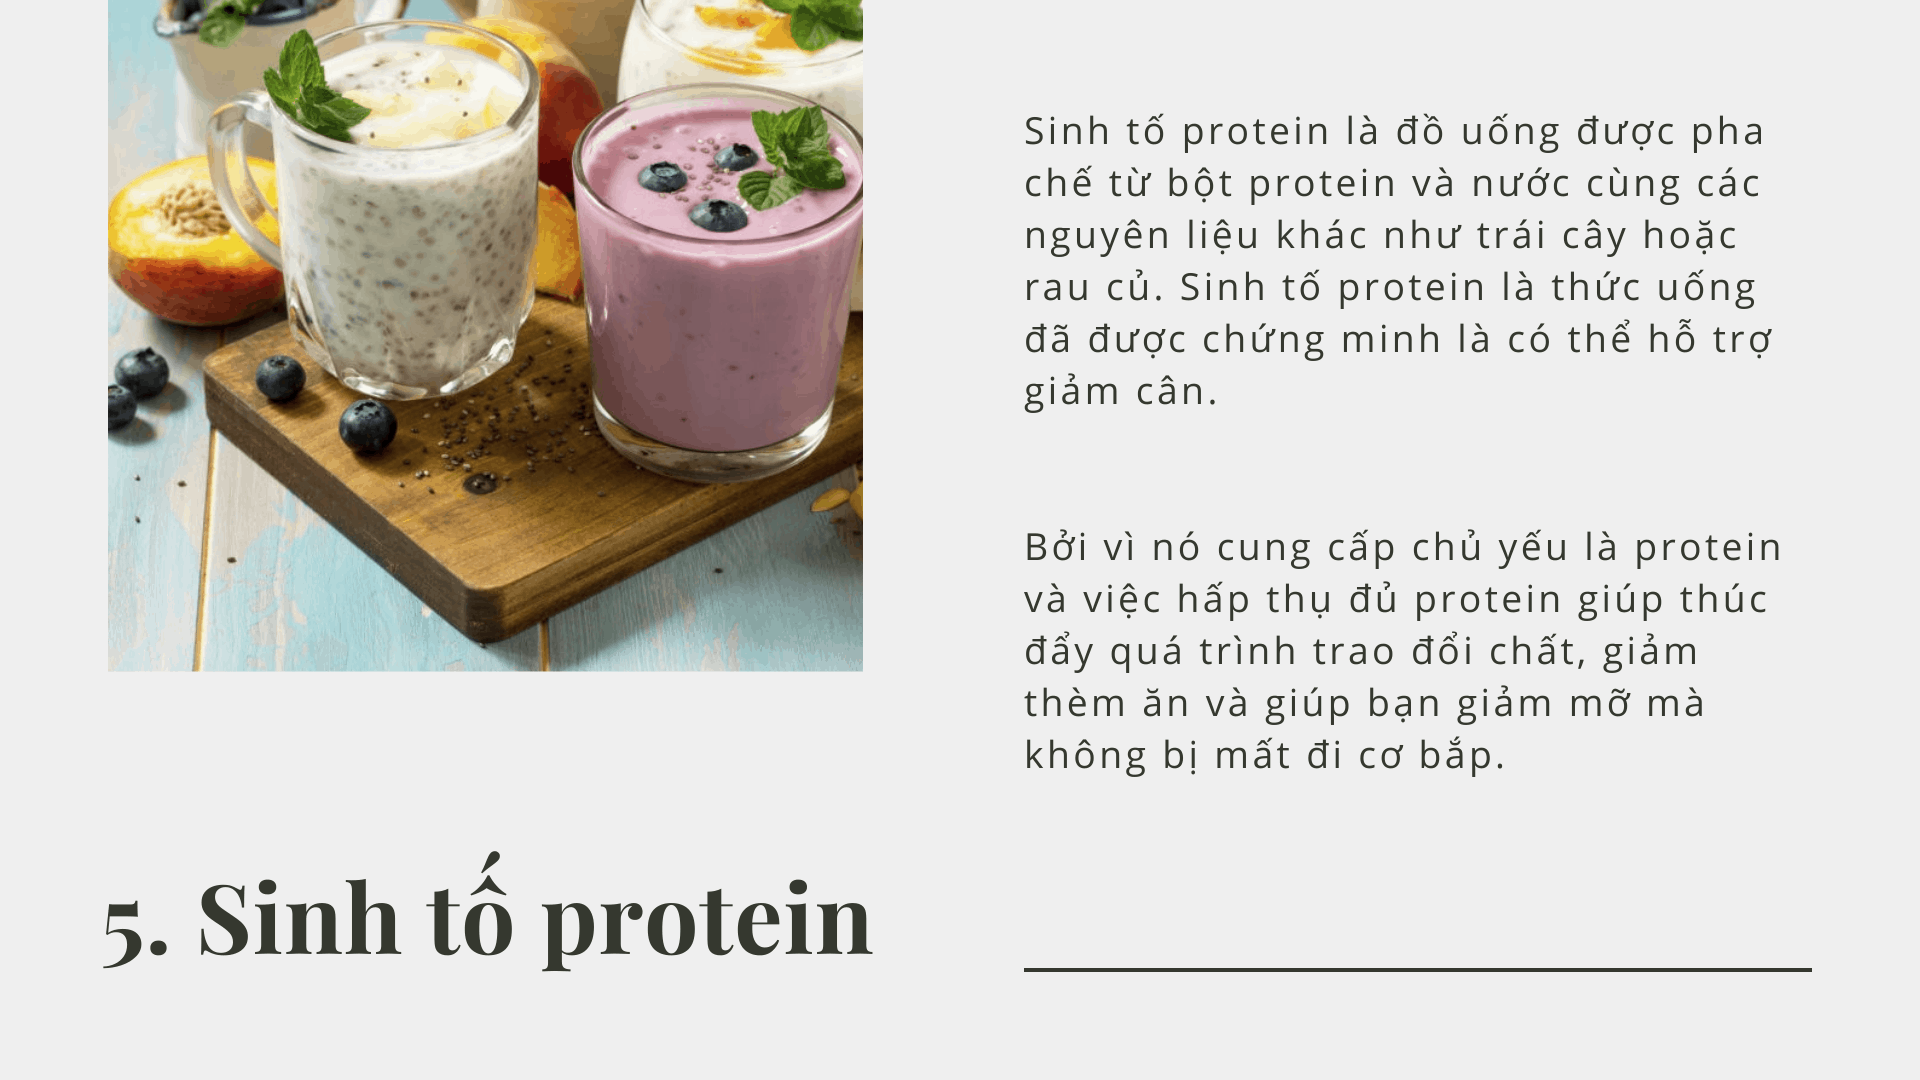 Sinh tố protein để giảm cân